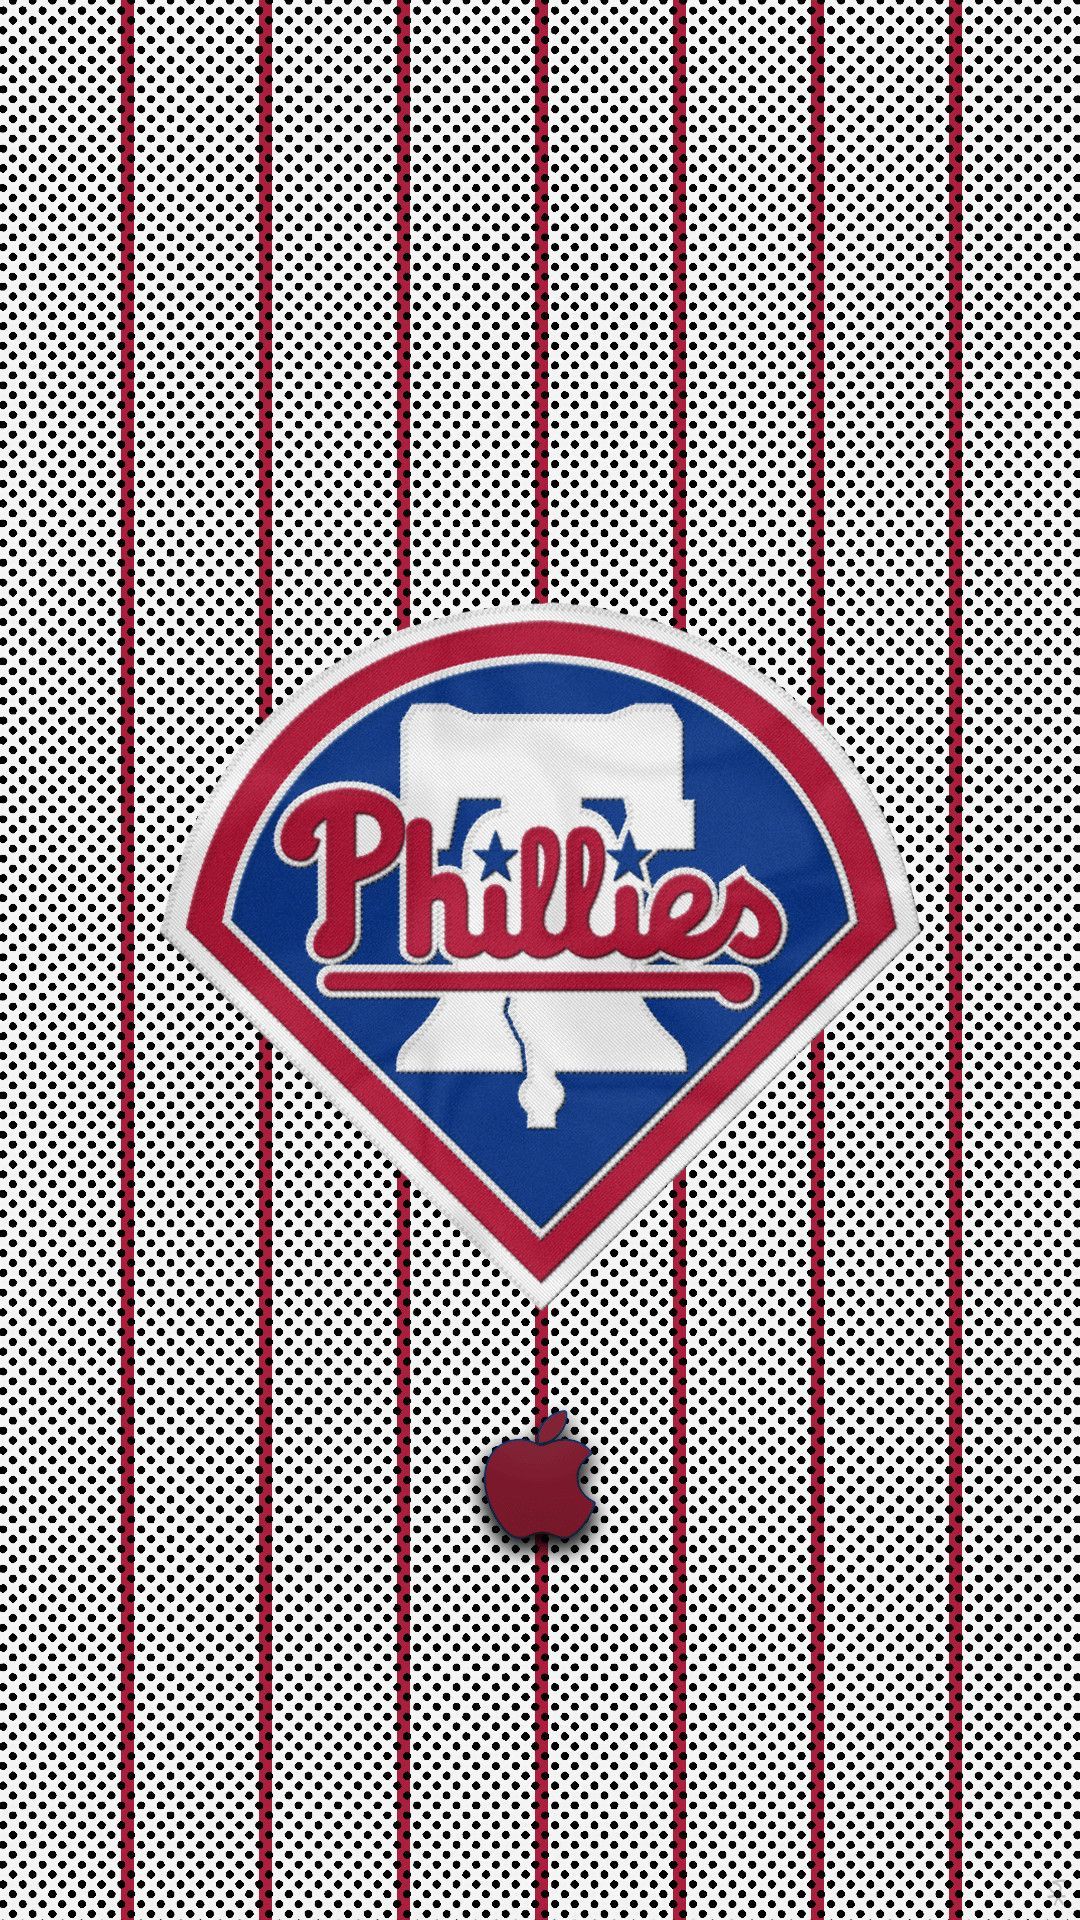 Phillies iPhone Wallpaper Free Phillies iPhone Background - Phillies, Baseball wallpaper, Phillies baseball